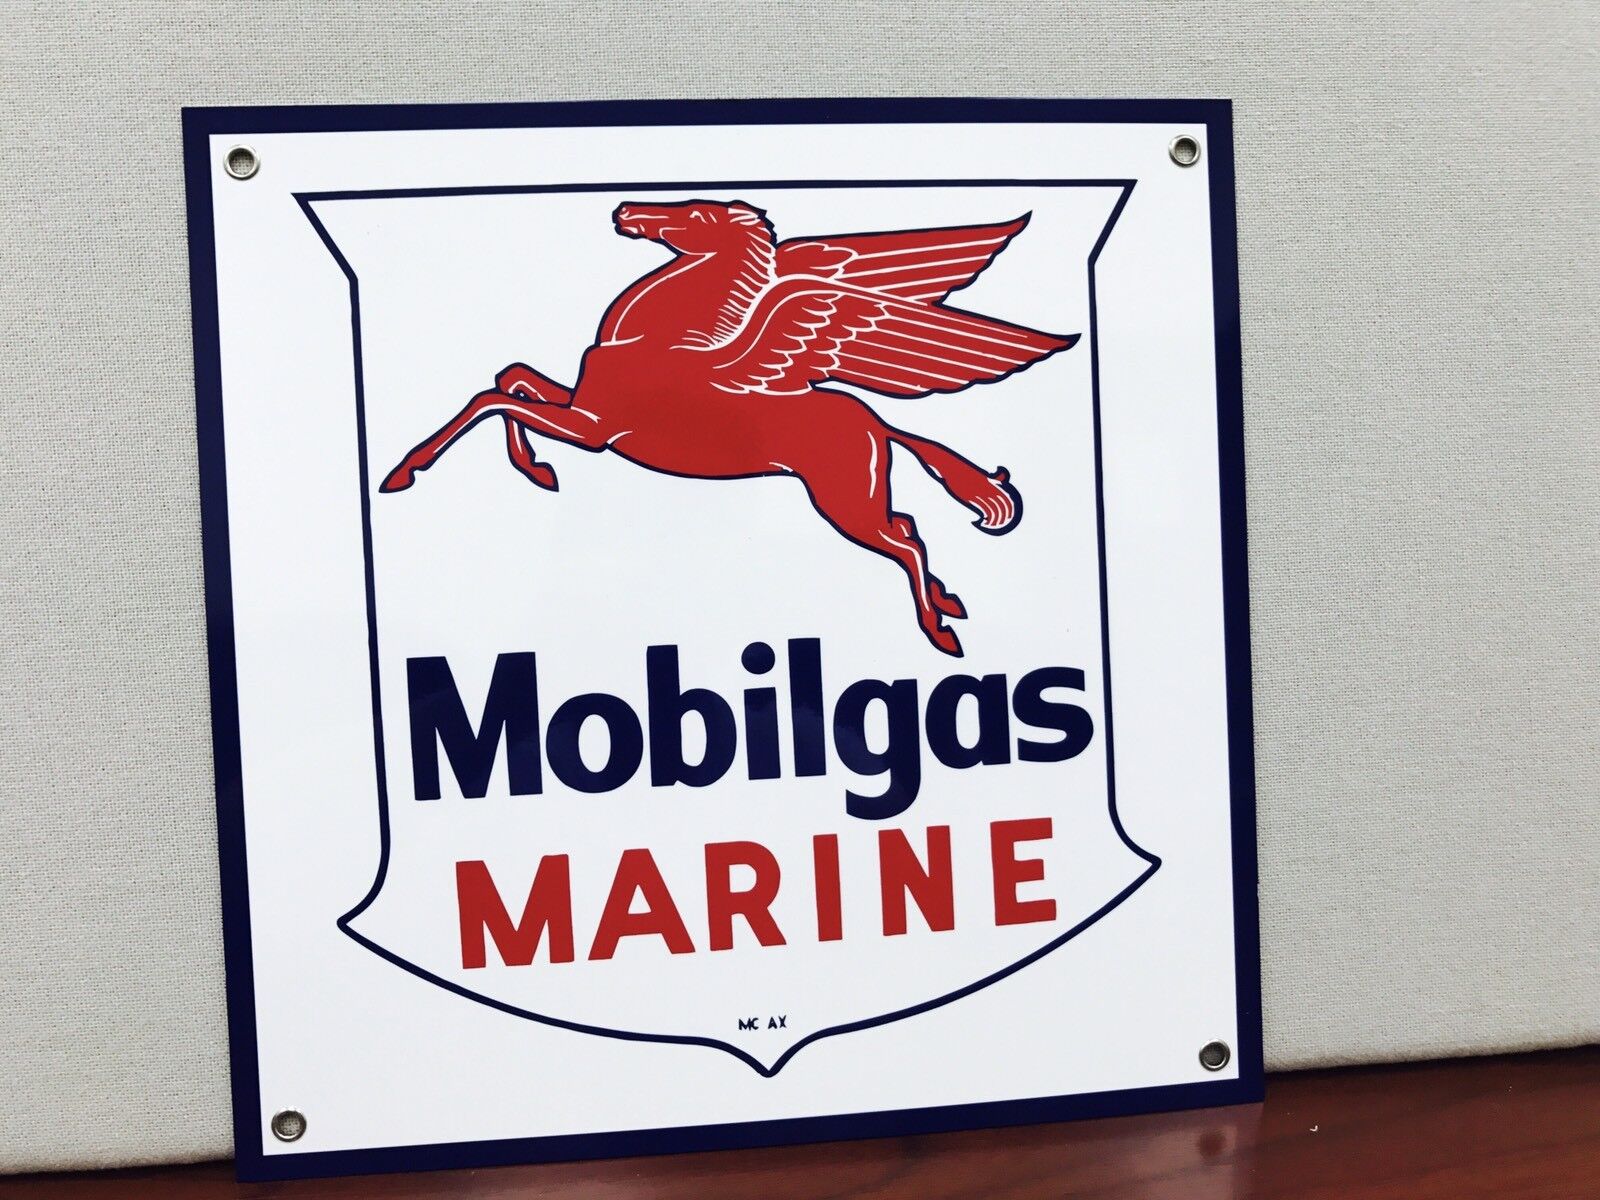 Mobilgas marine rare Mobil Gas pegasus oil gasoline vintage advertising sign